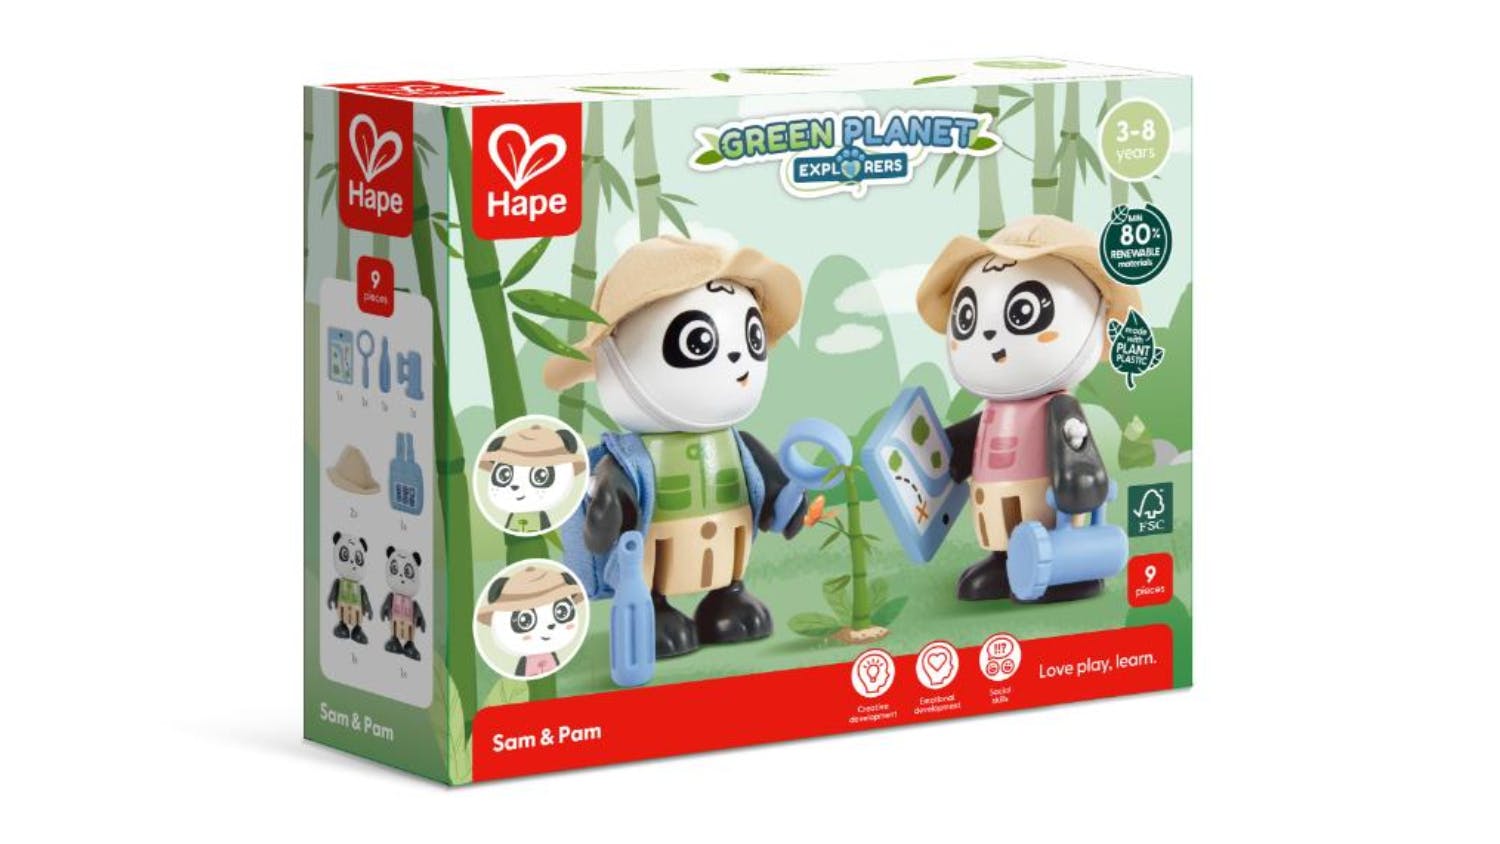 Hape "Green Planet" Figurine Set - Sam & Pam Panda